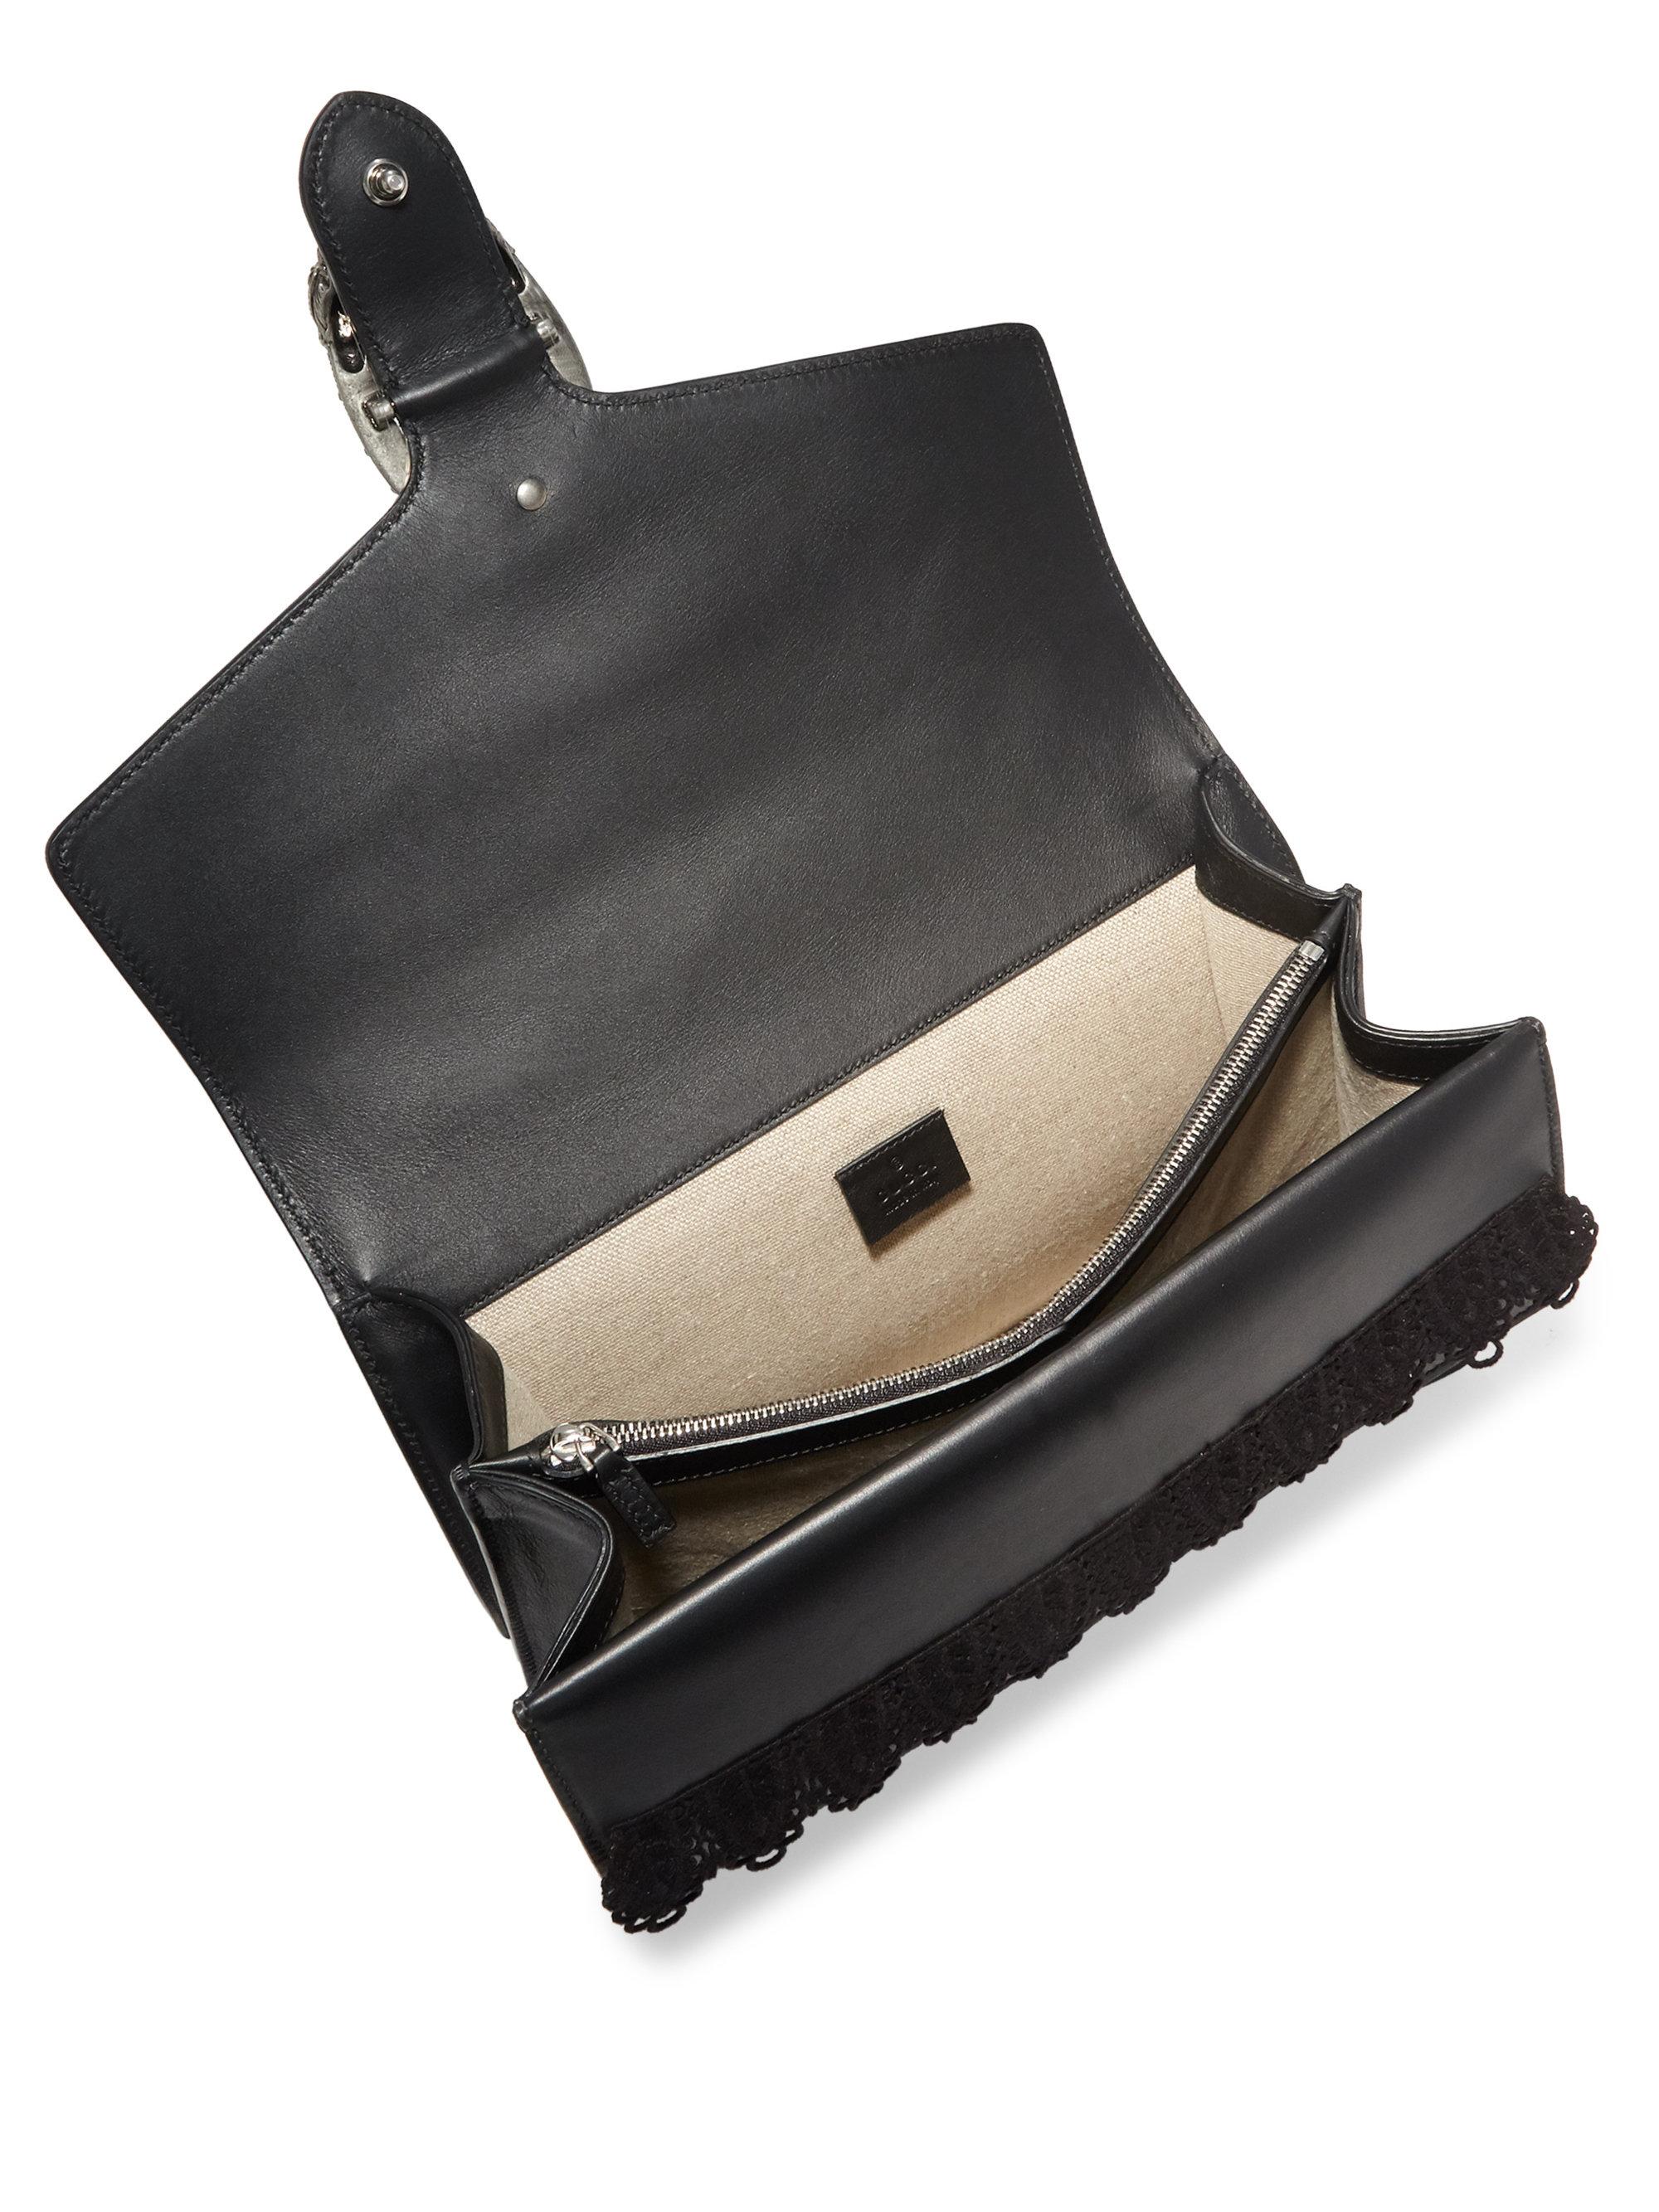 Lyst - Gucci Dionysus Medium Embroidered Leather Shoulder Bag in Black